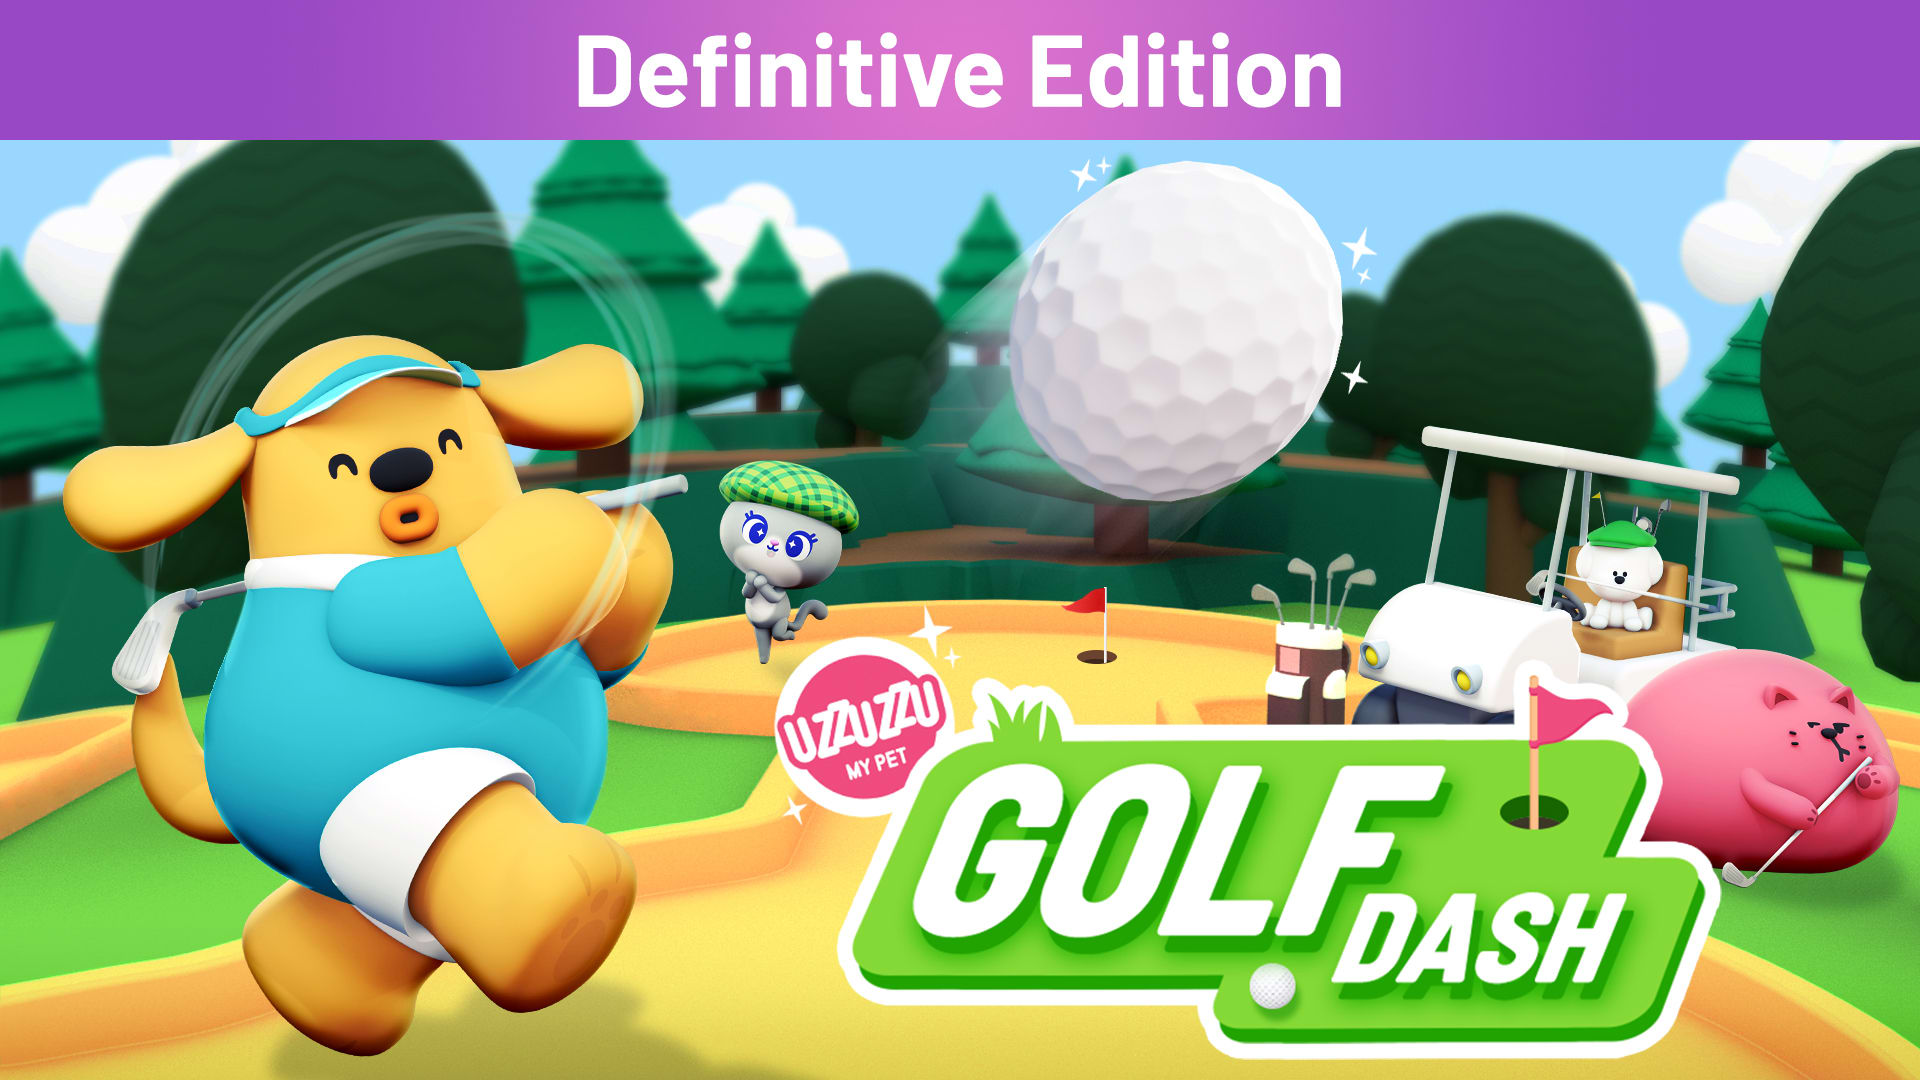 Uzzuzzu My Pet - Golf Dash Definitive Edition